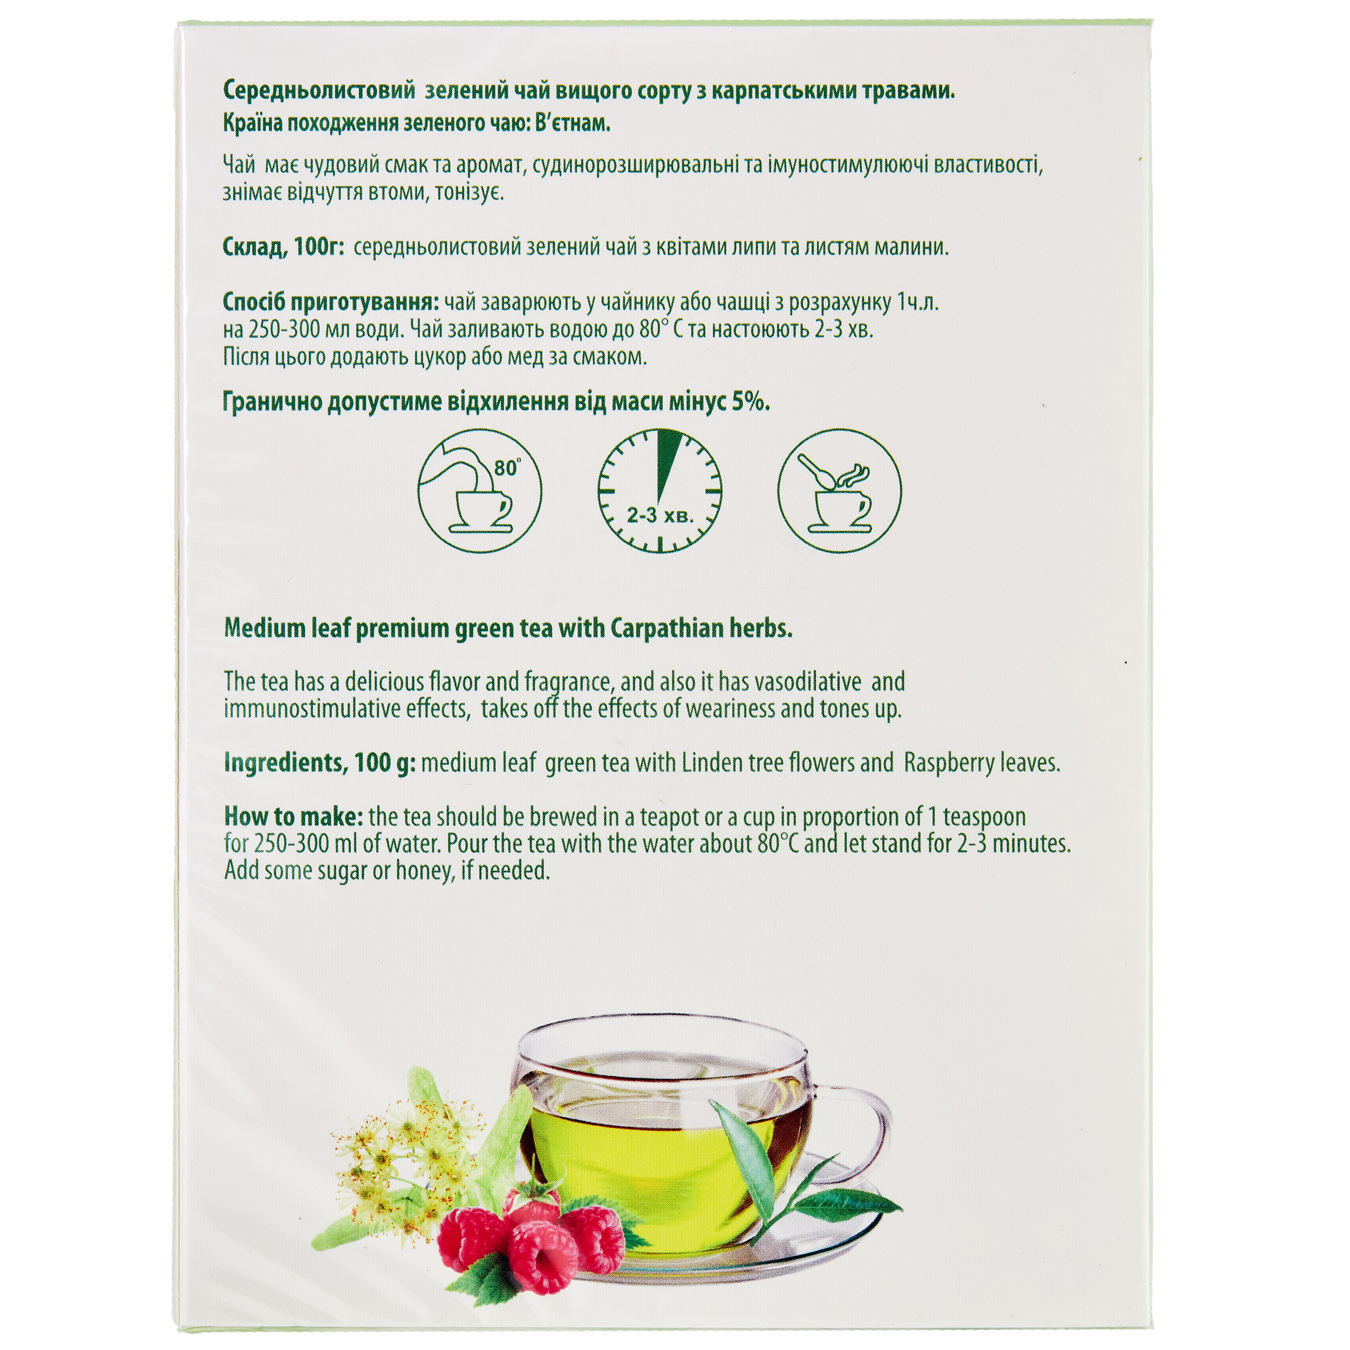 Beskyd Morning Green Tea with Carpathian Herbs 100g 2